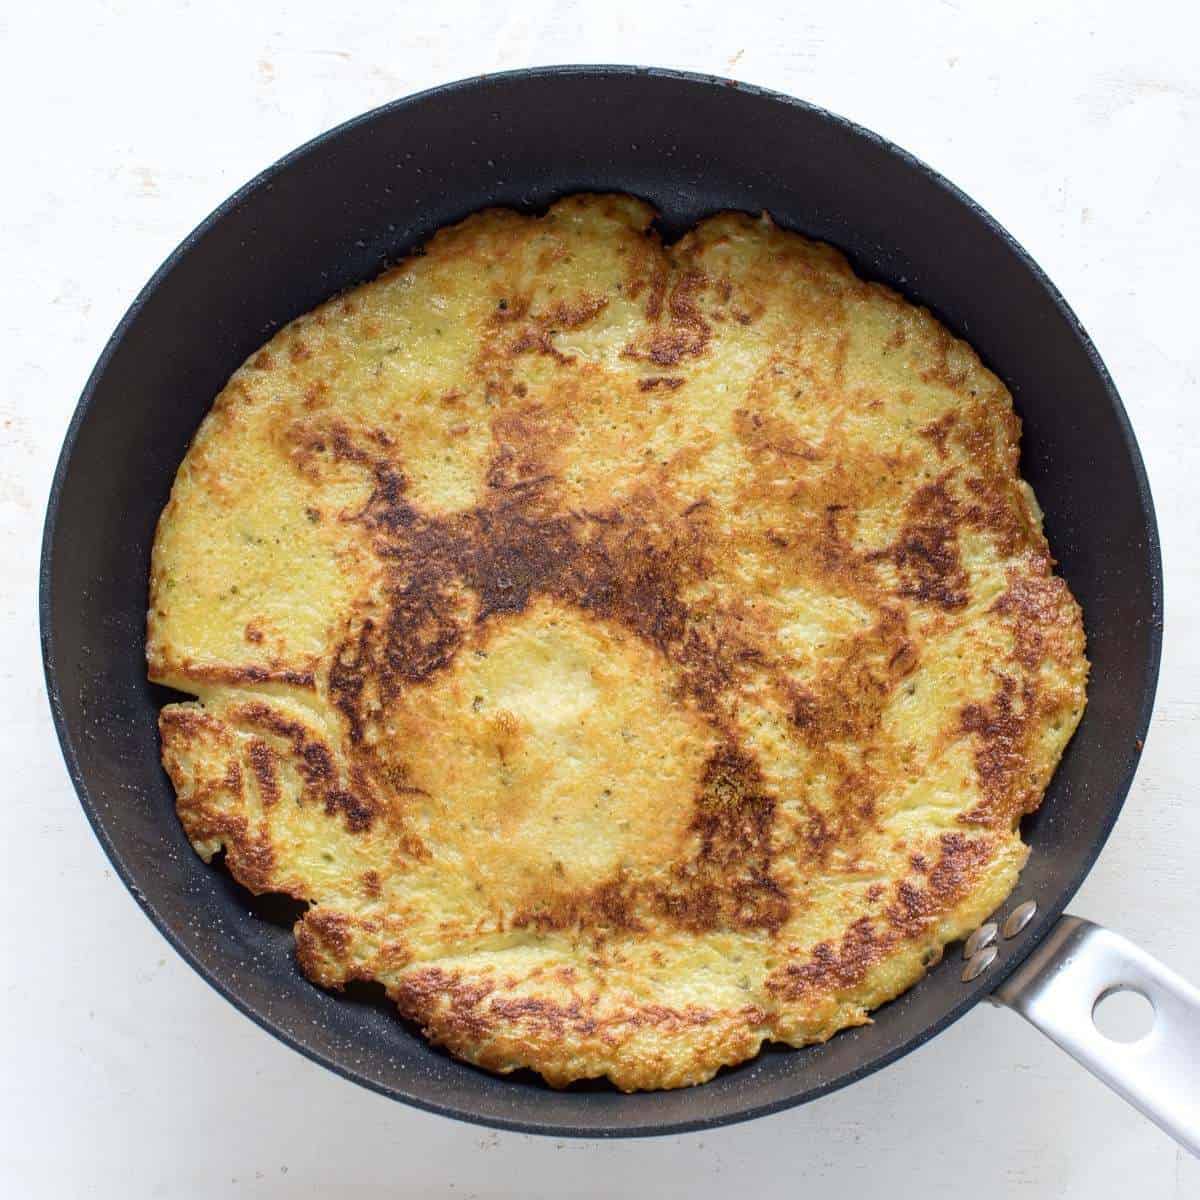 A potato pancake is frying in a pan.